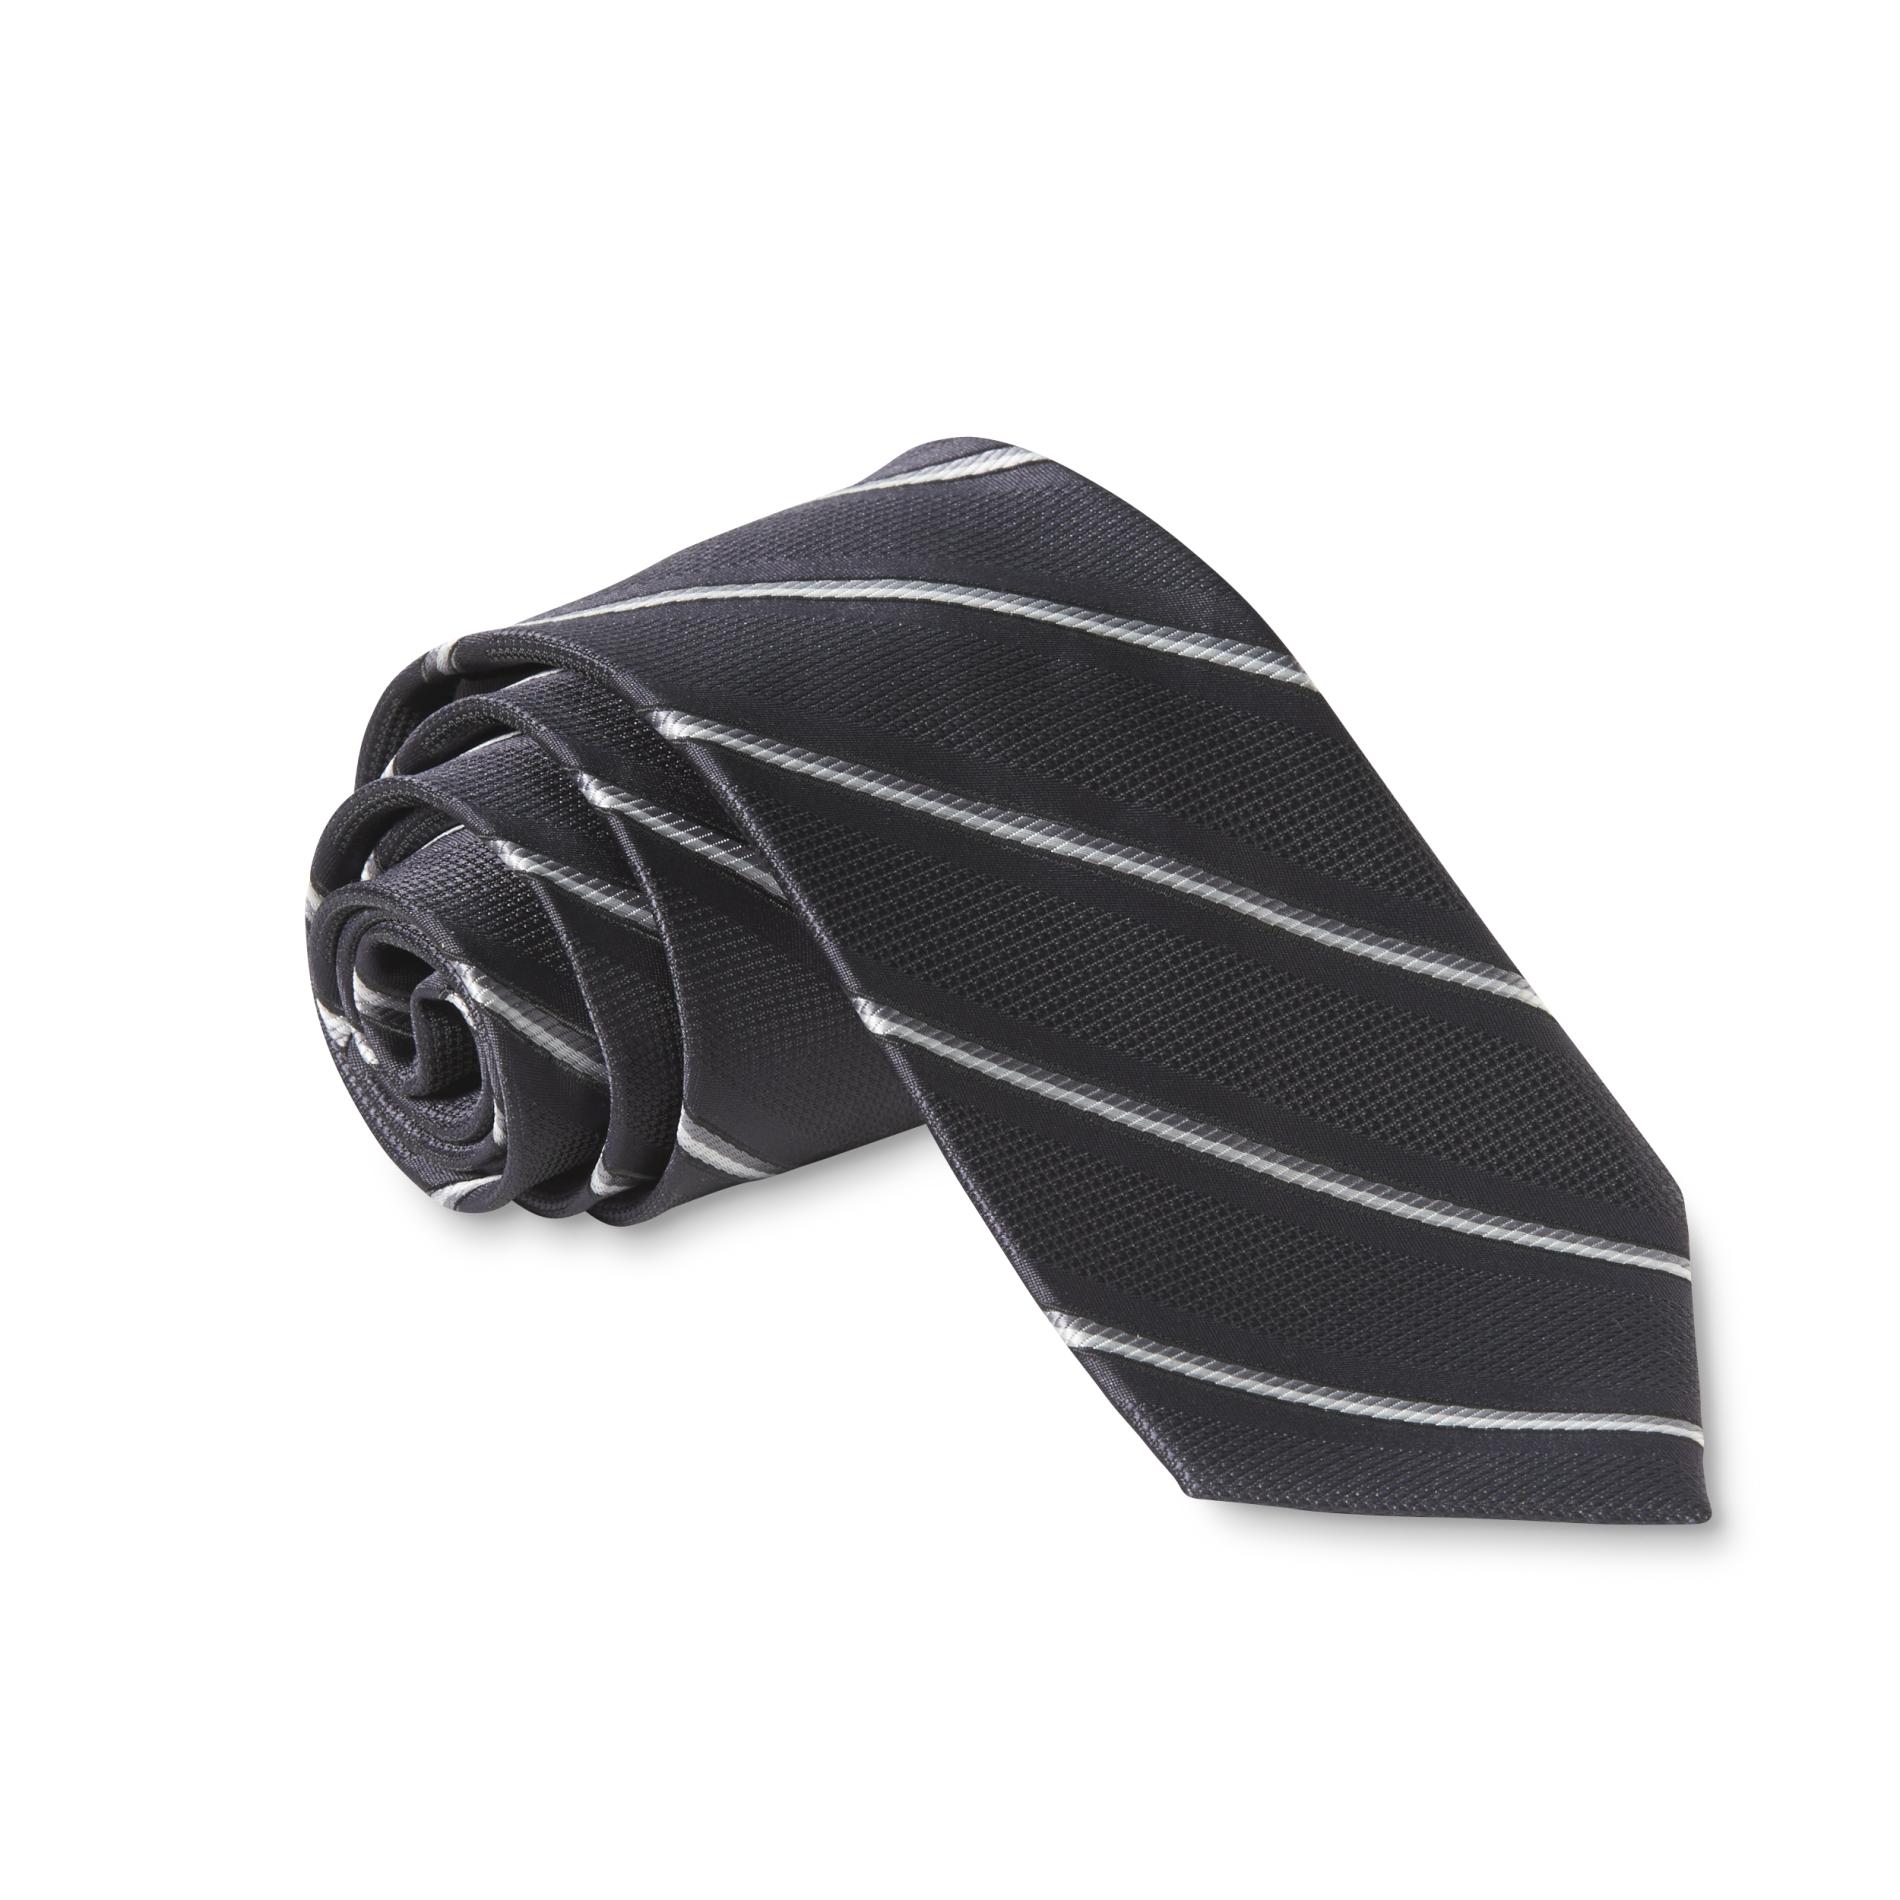 David Taylor Collection Men's Necktie - Striped